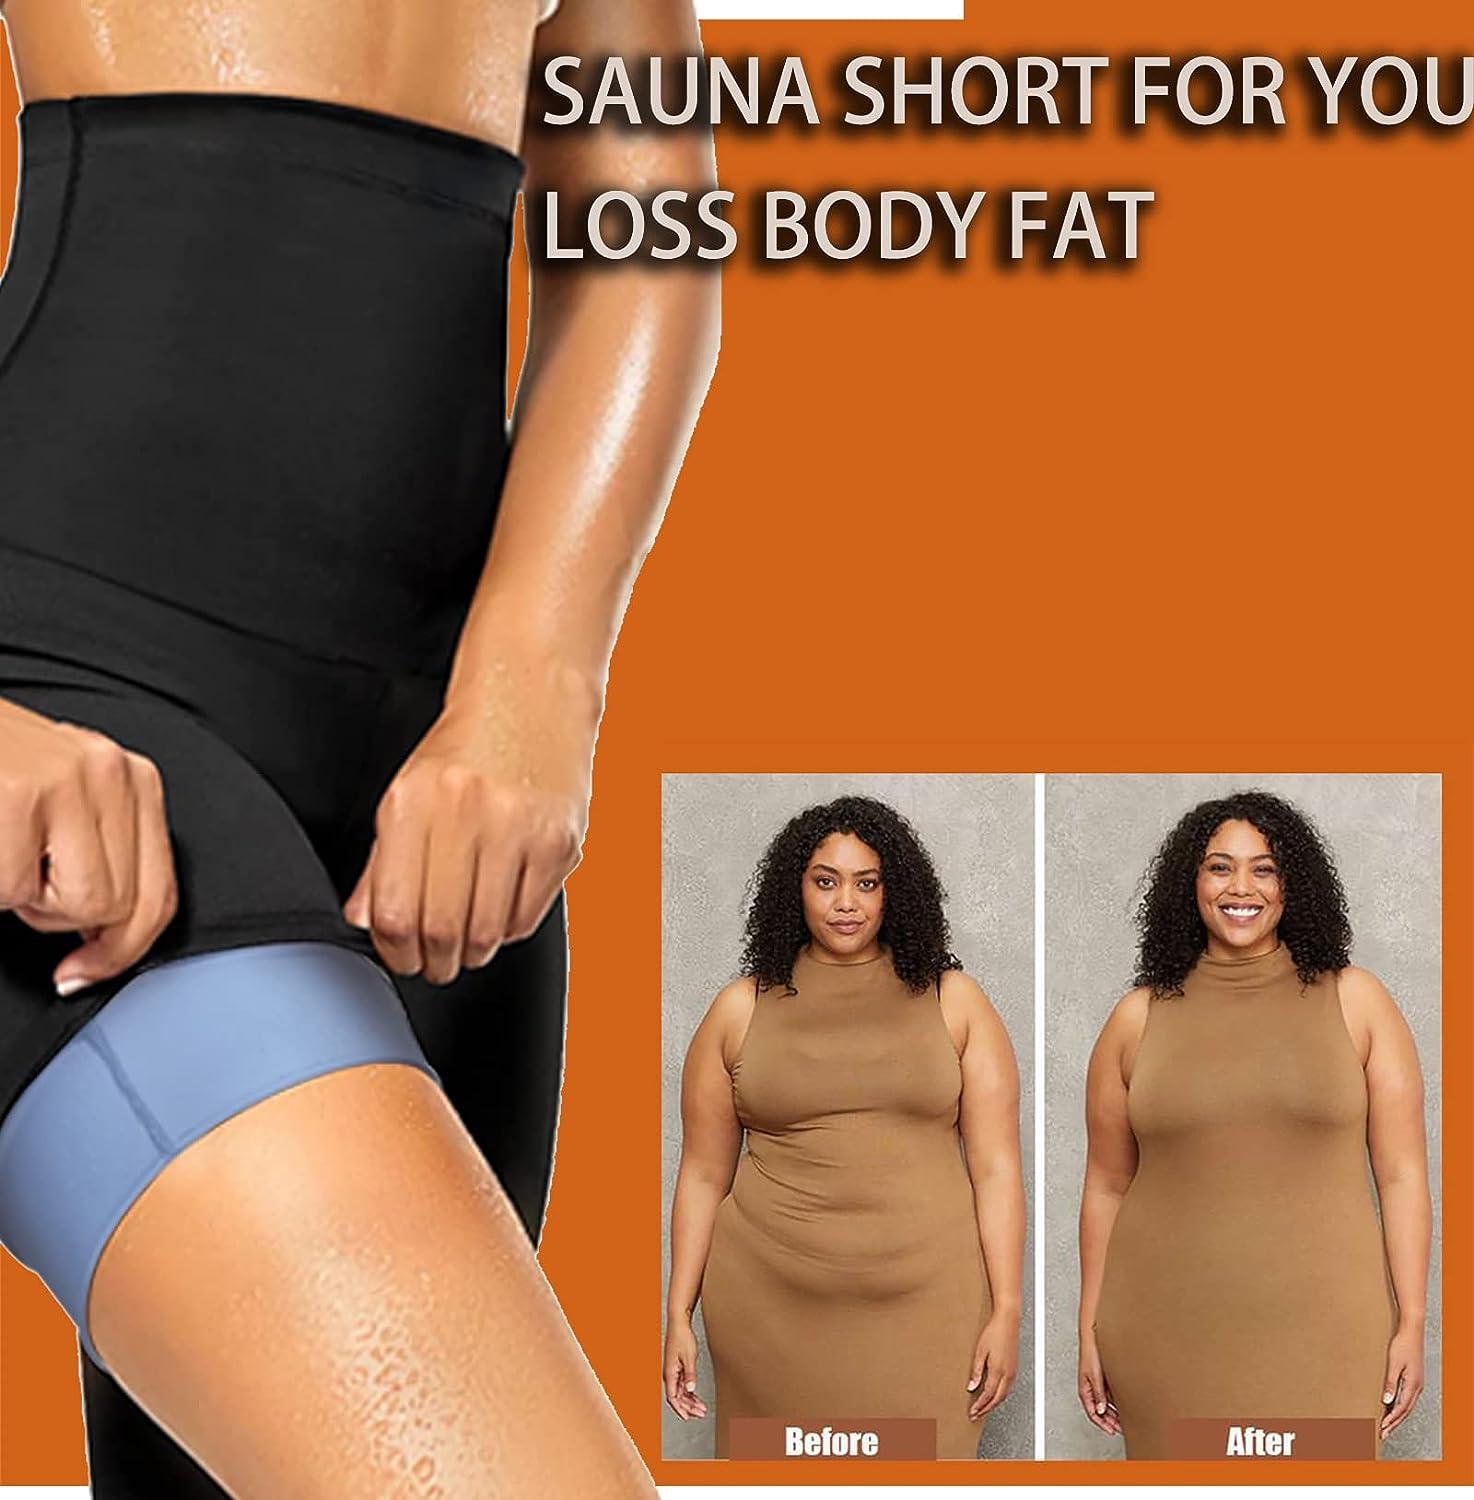 Blue Healthy Slimming Belt Abdomen Shaper Burn Fat Lose Weight Fitness Fat  Cellulite Slimming Body Shaper Waist Belt neoprene 